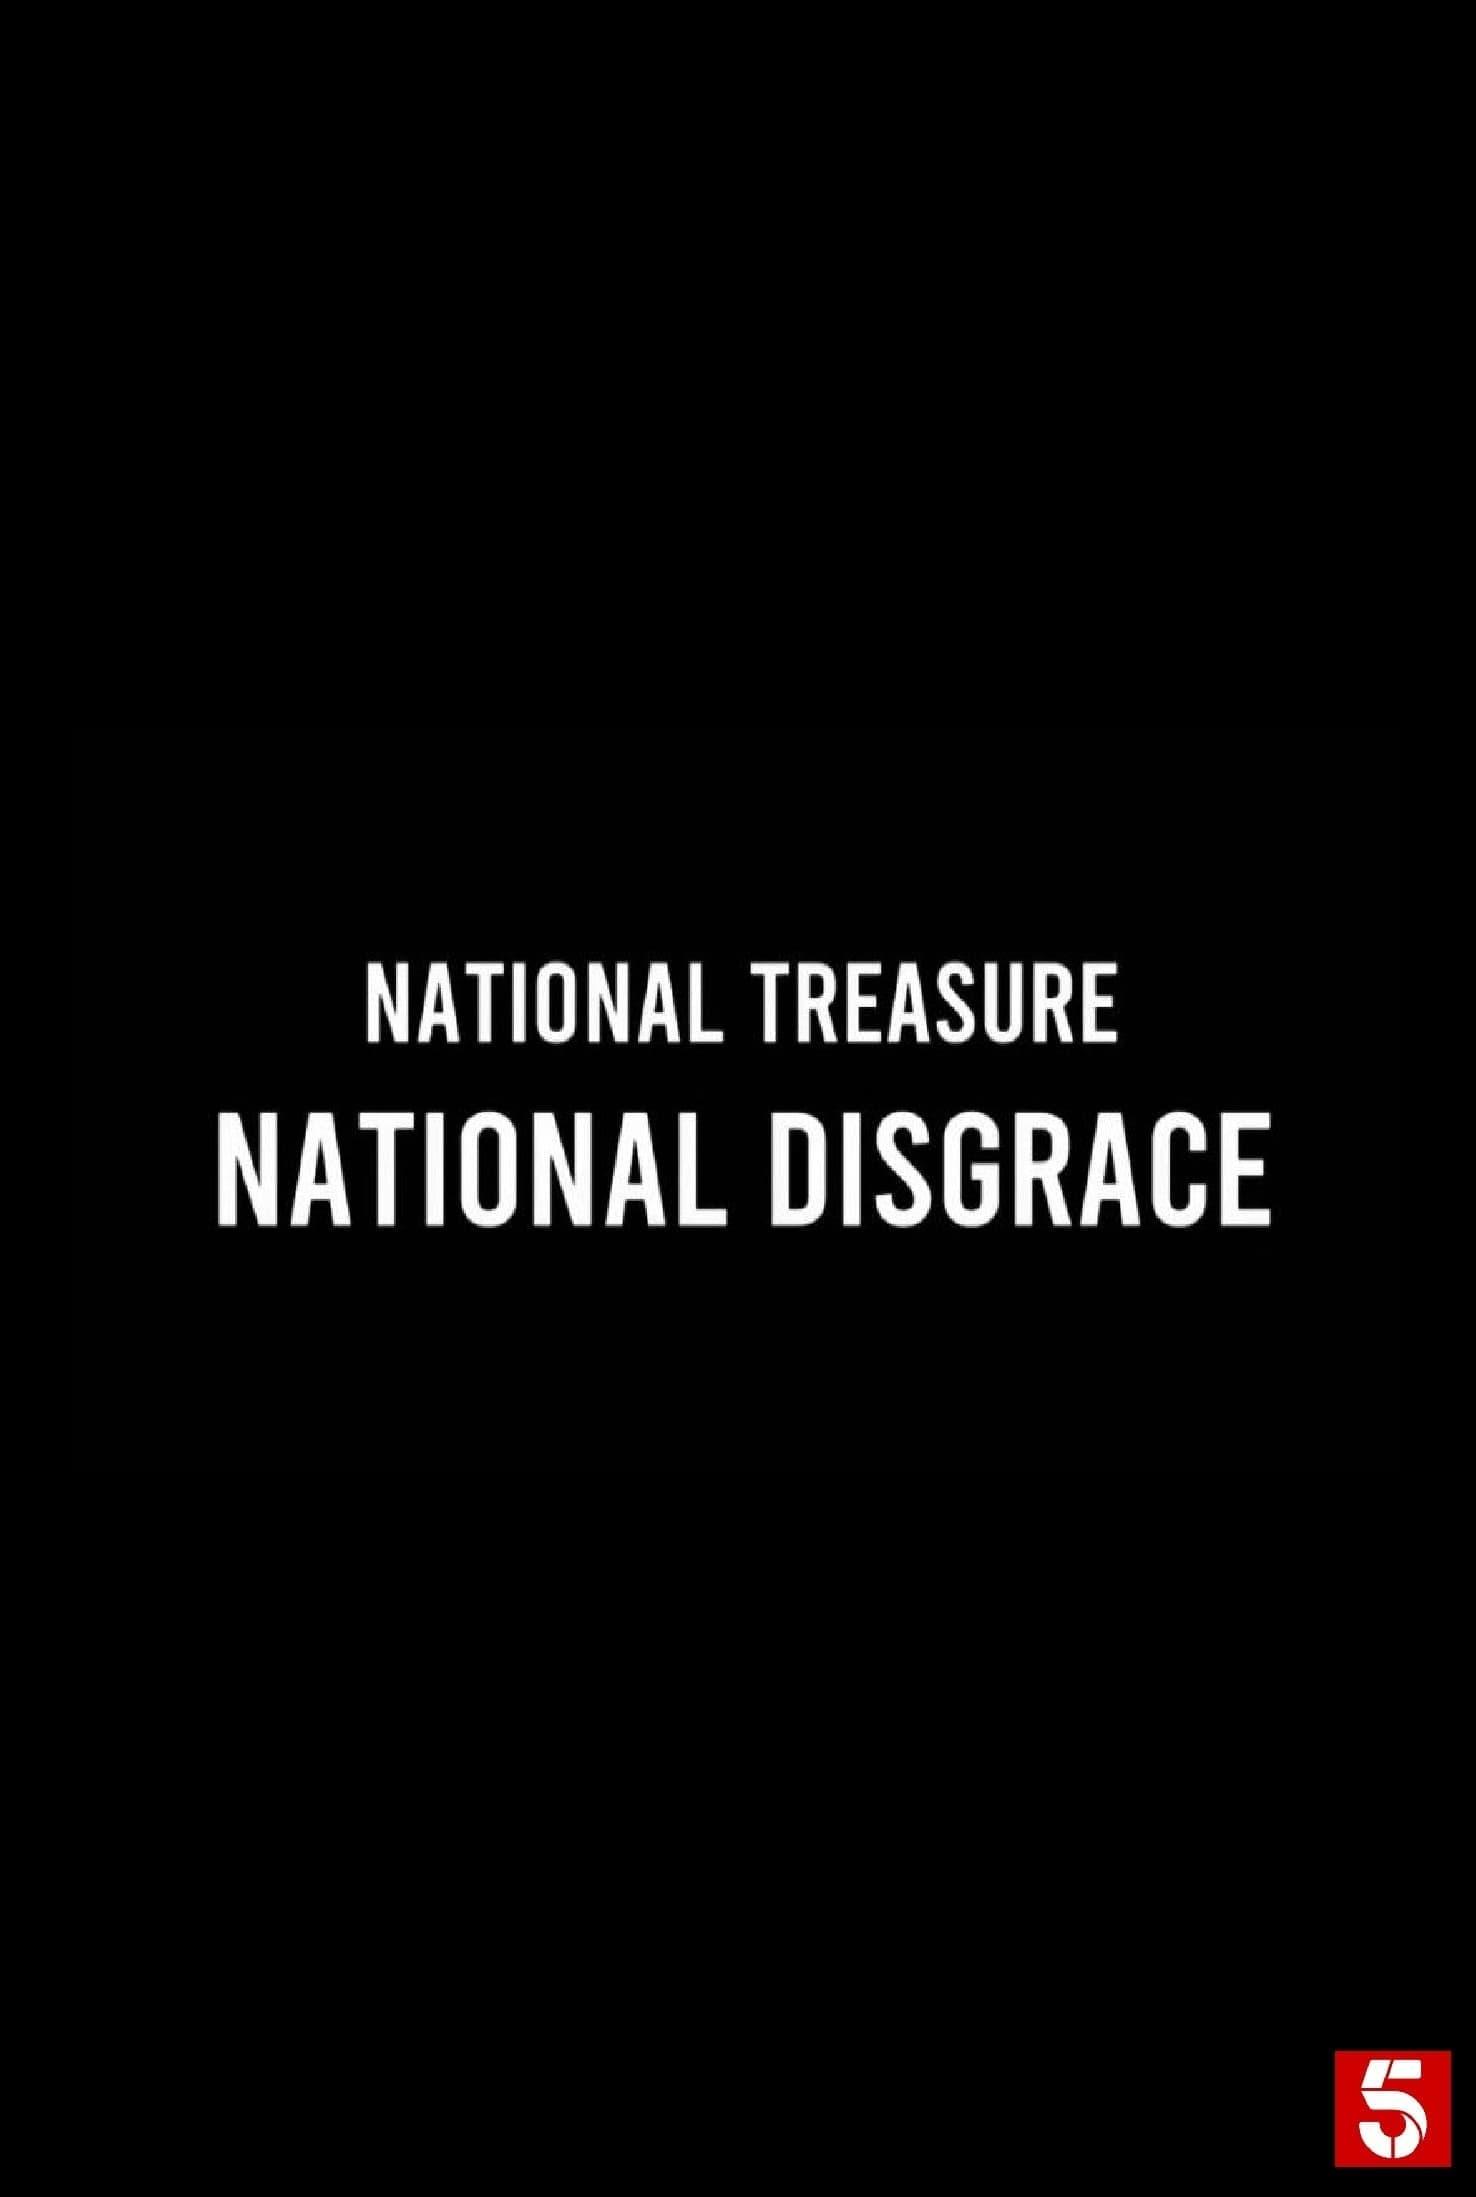 National Treasure, National Disgrace: Savill, Harris & Hall poster